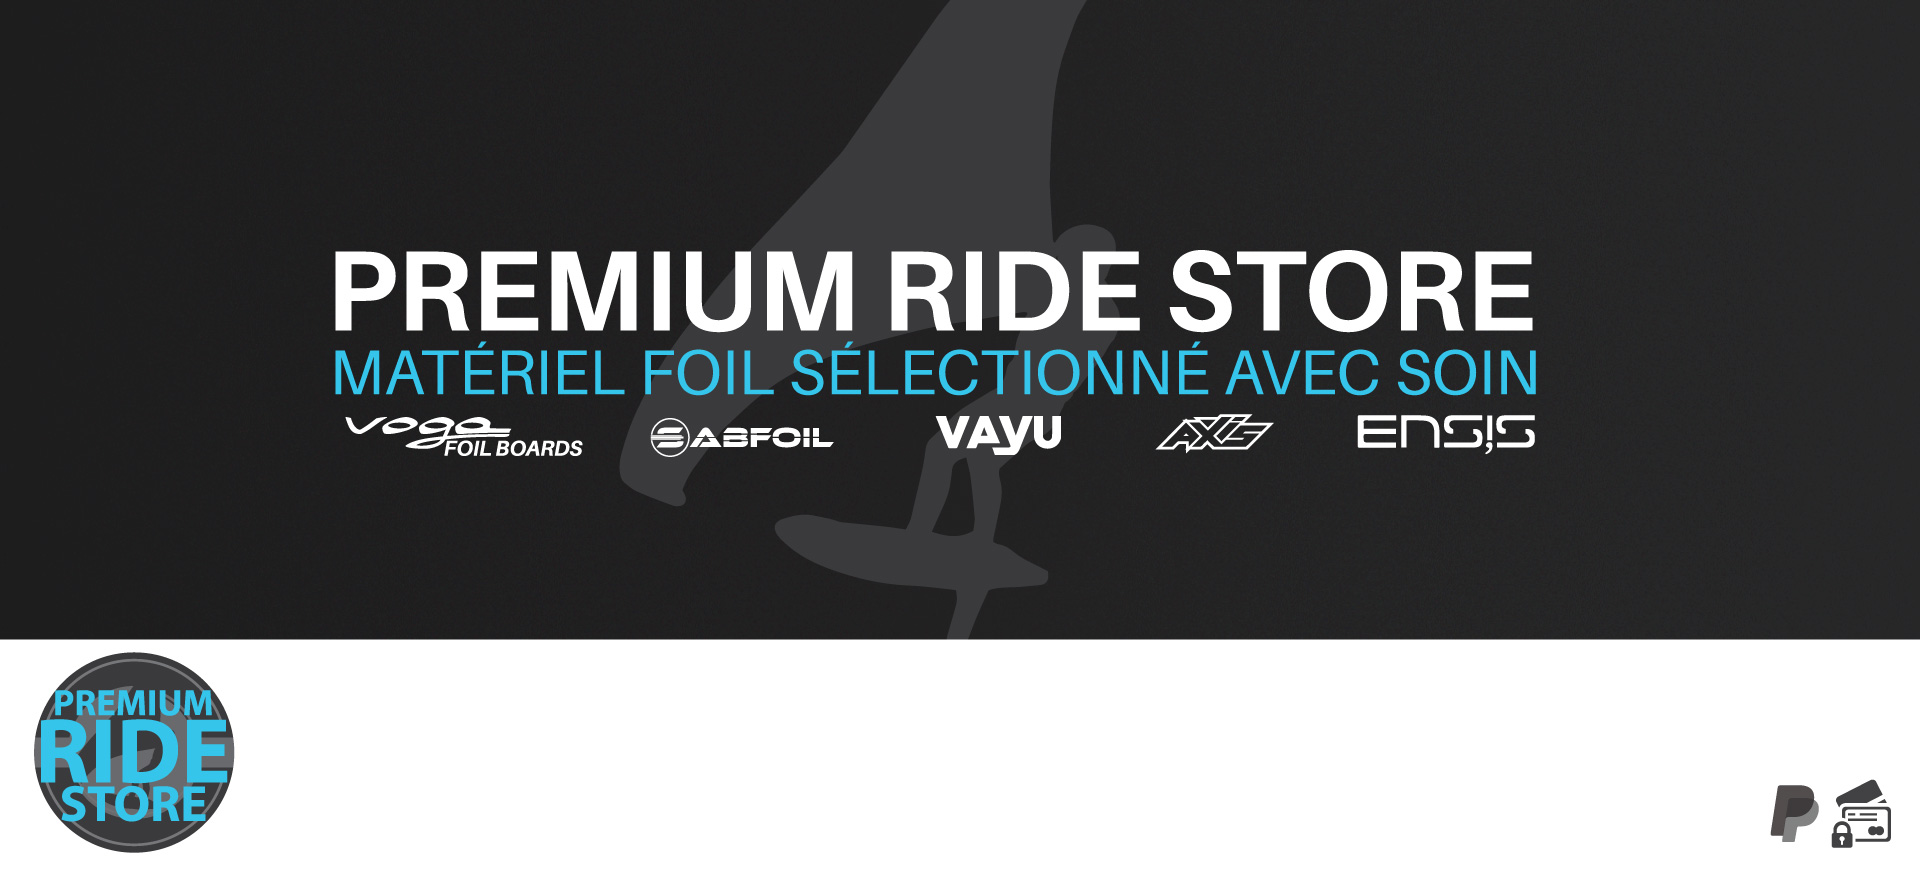 premium ride store materiel foil